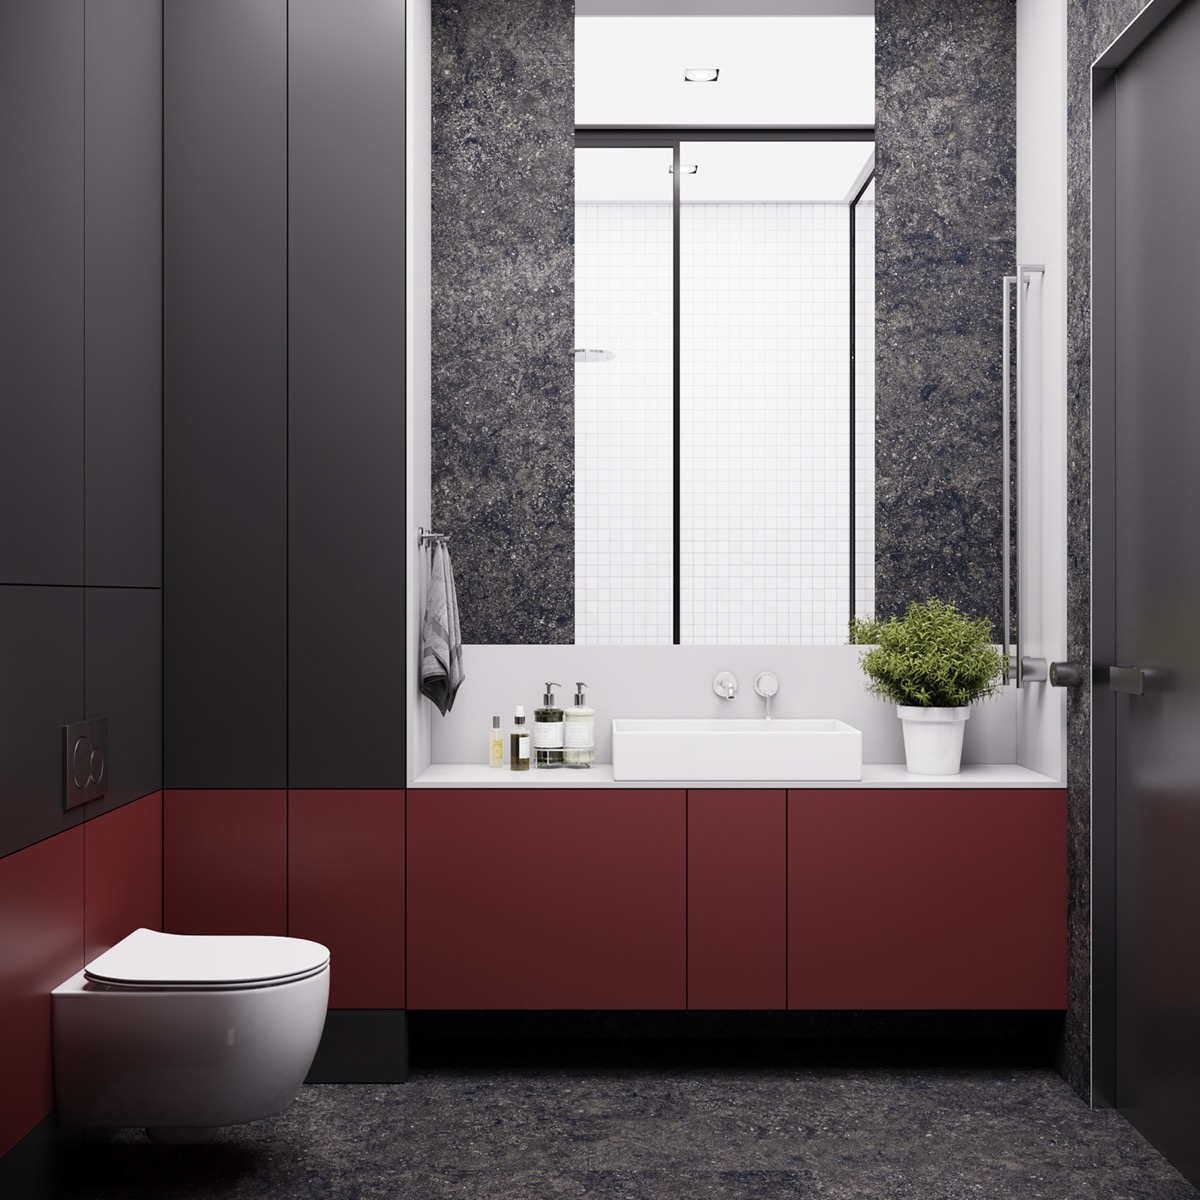 red-bathroom-600x600.jpg